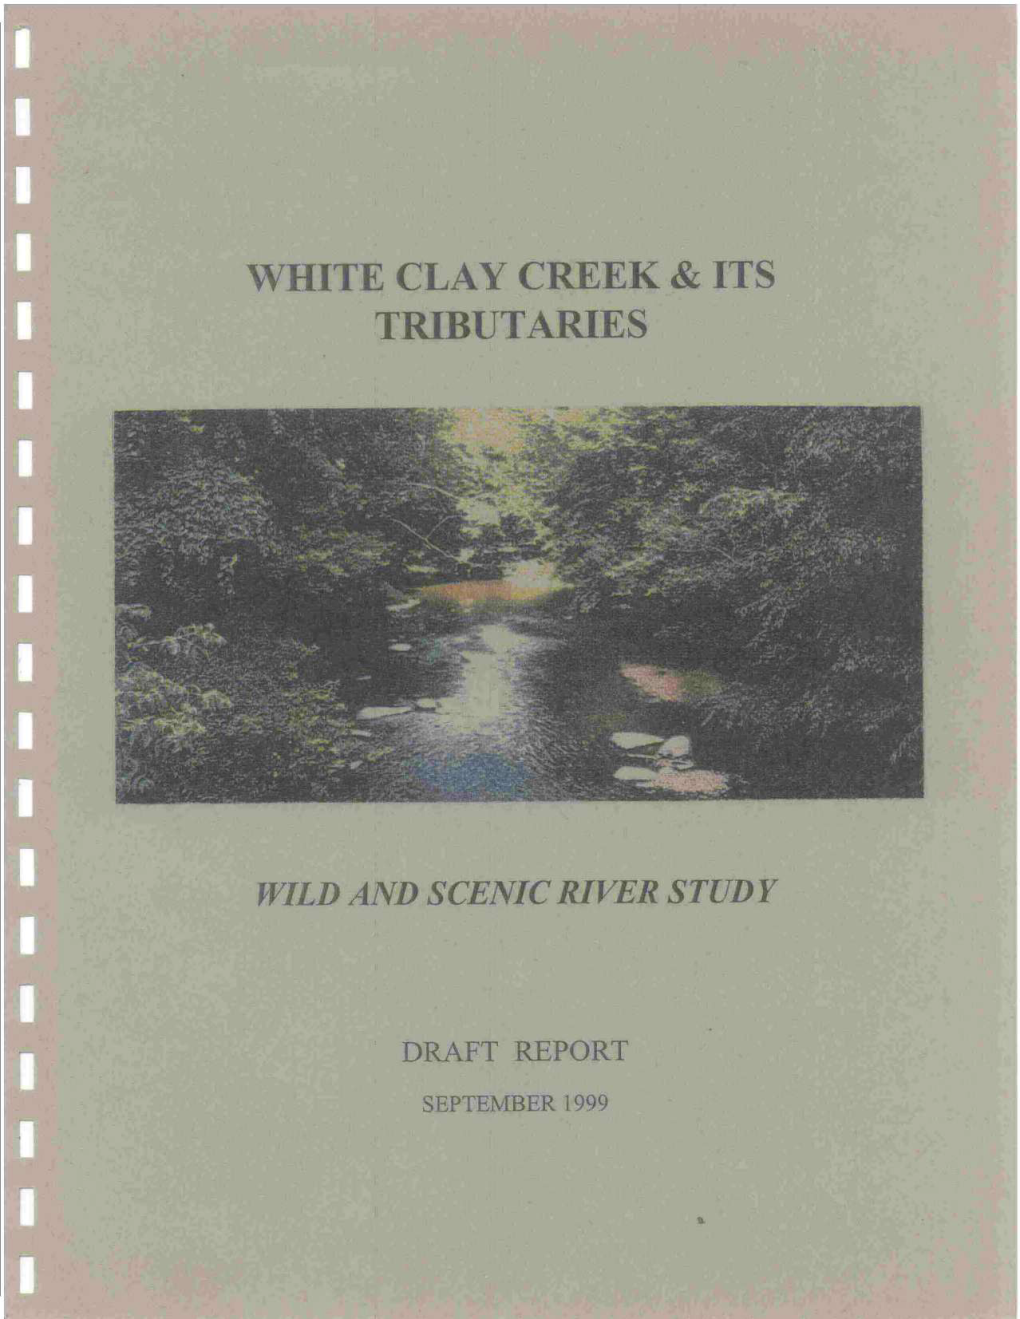 White Clay Creek & Its Tributaries